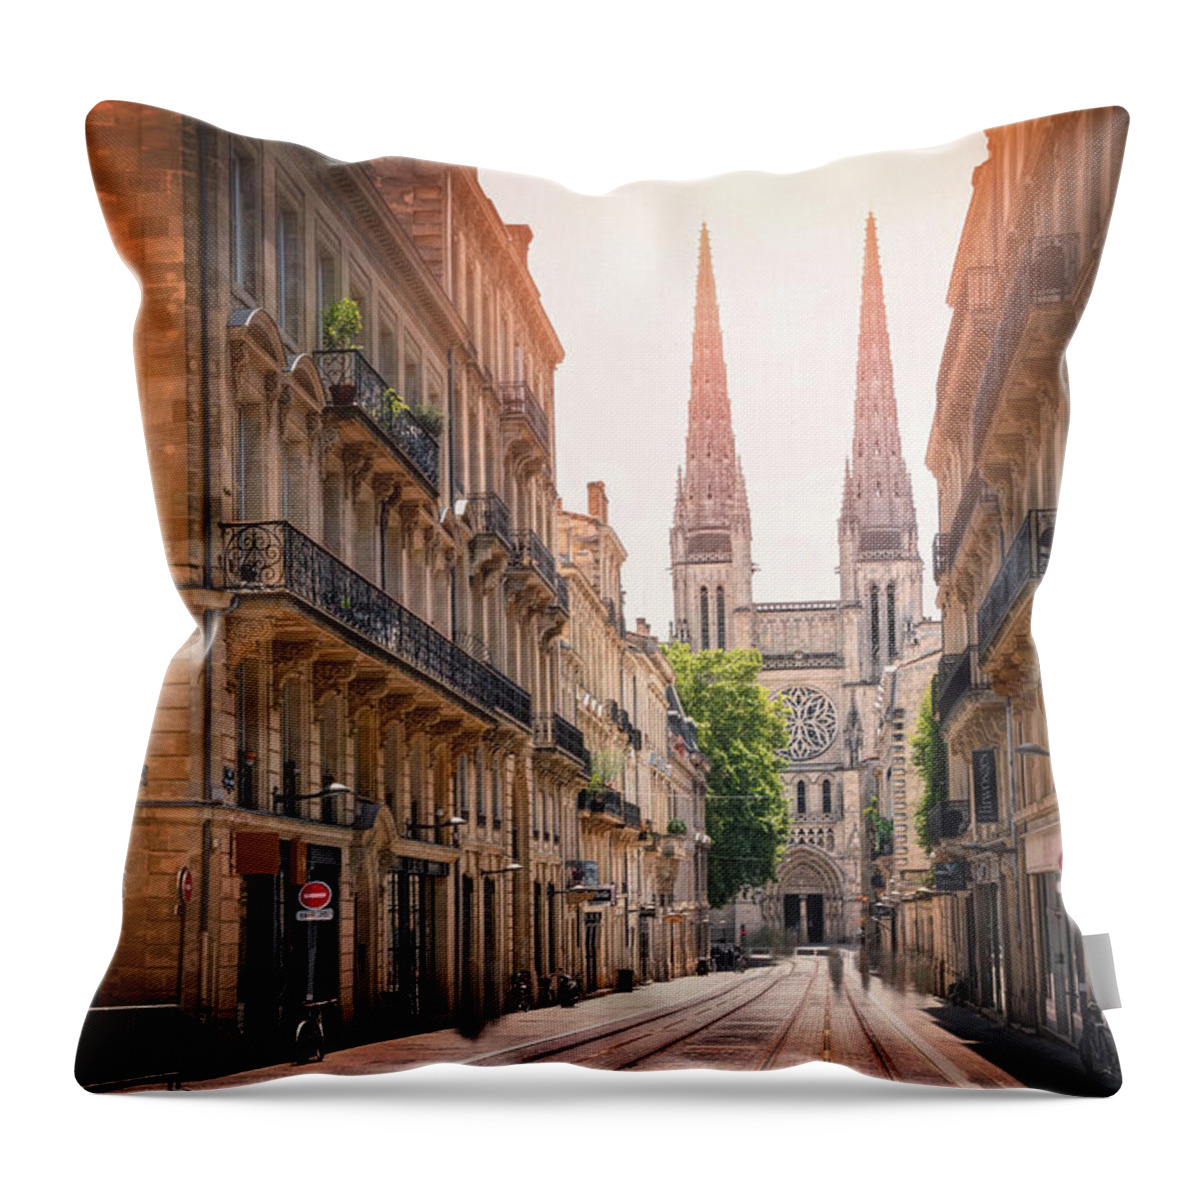 Bordeaux Throw Pillow featuring the photograph Rue Vital Carles Bordeaux France by Carol Japp